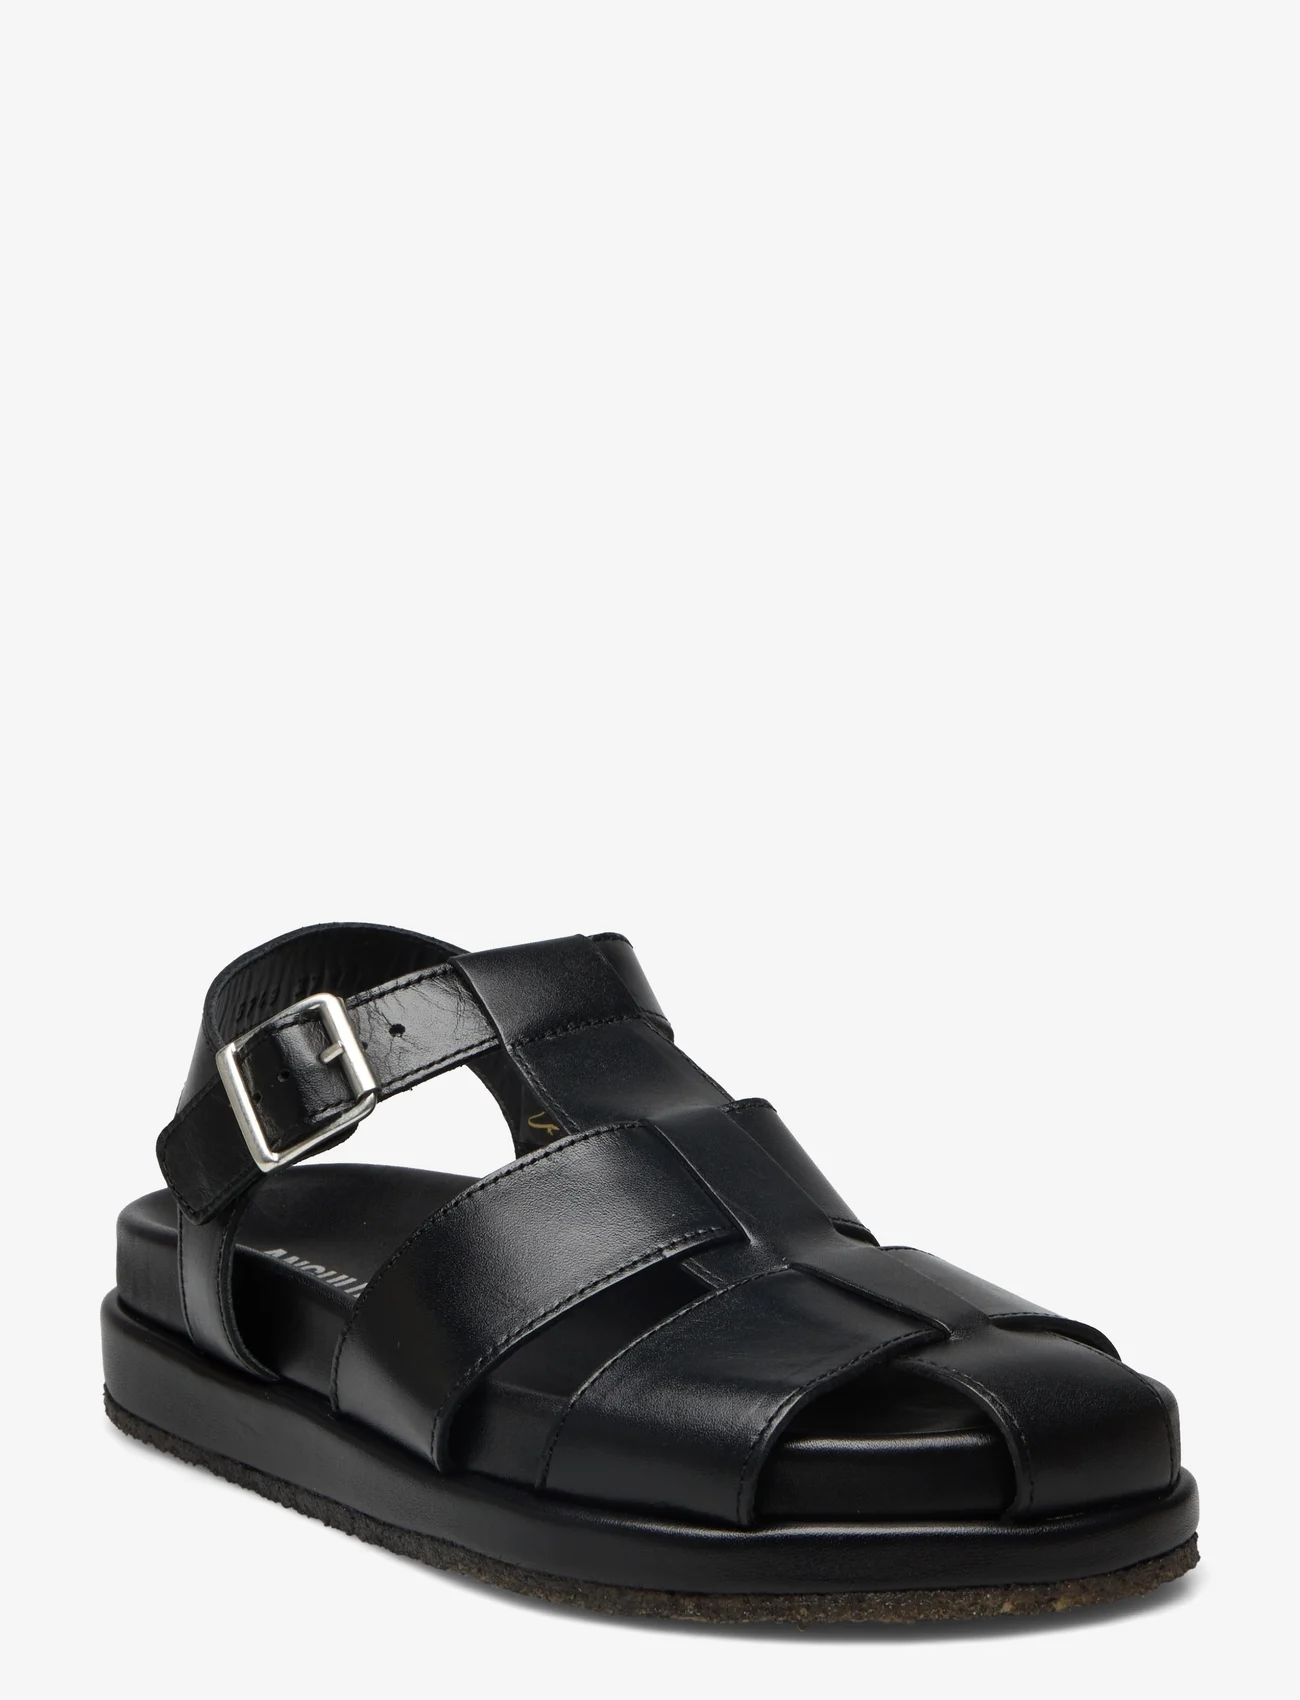 ANGULUS - Sandals - flat - open toe - op - flache sandalen - 1604/1785 black - 0